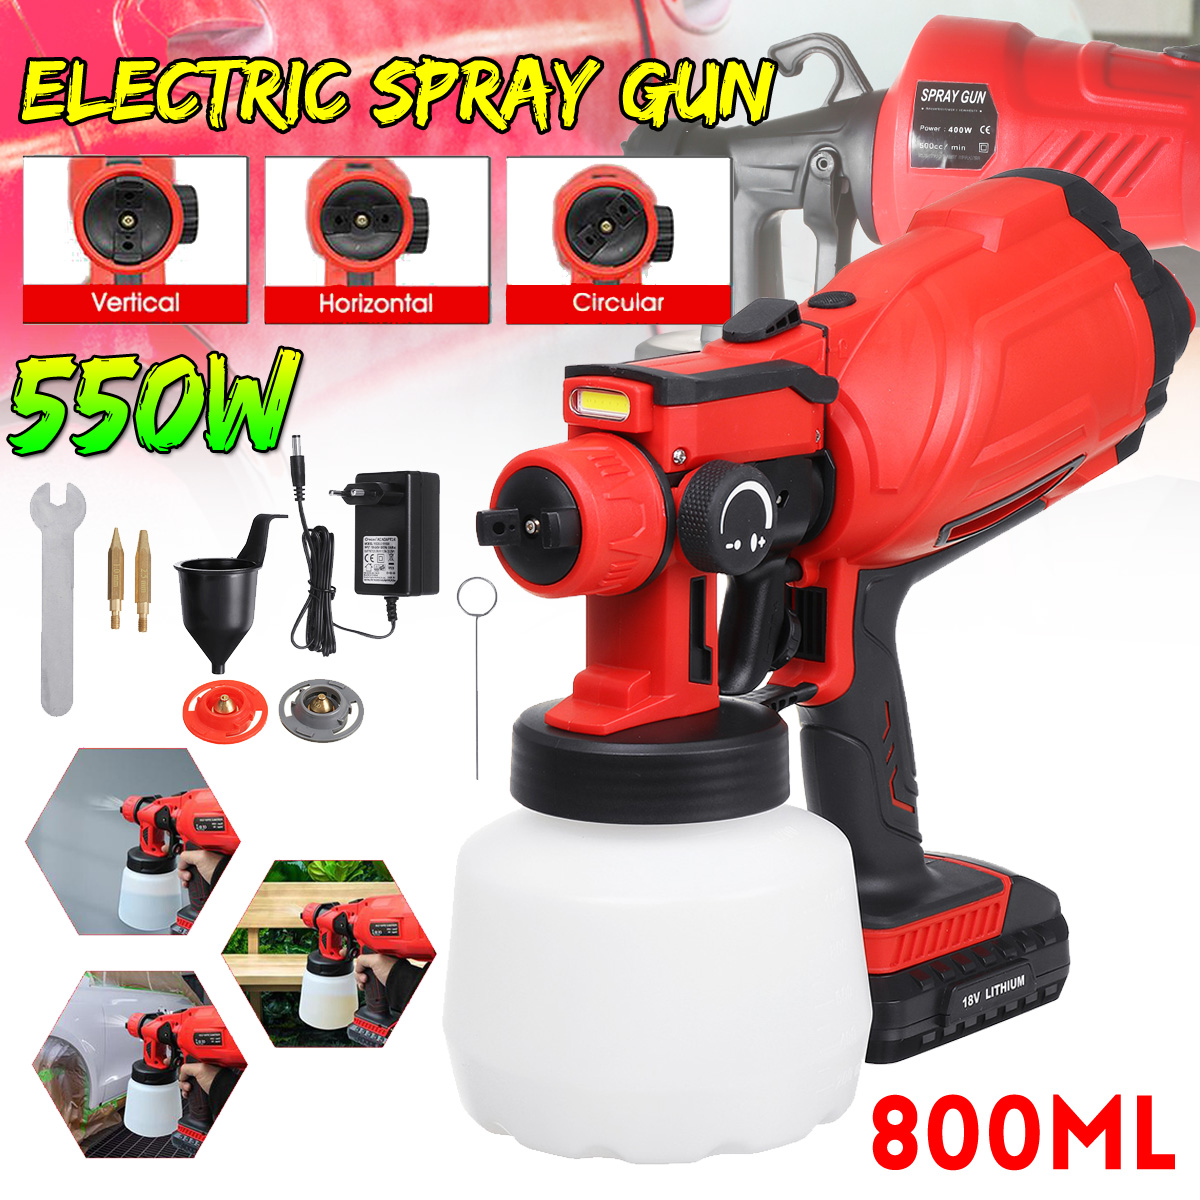 550W-Cordless-Electric-Spray-Guns-800ML-Lighting-Paint-Sprayer-Wood-Wall-Fences-Painting-Tool-W-Batt-1839681-1